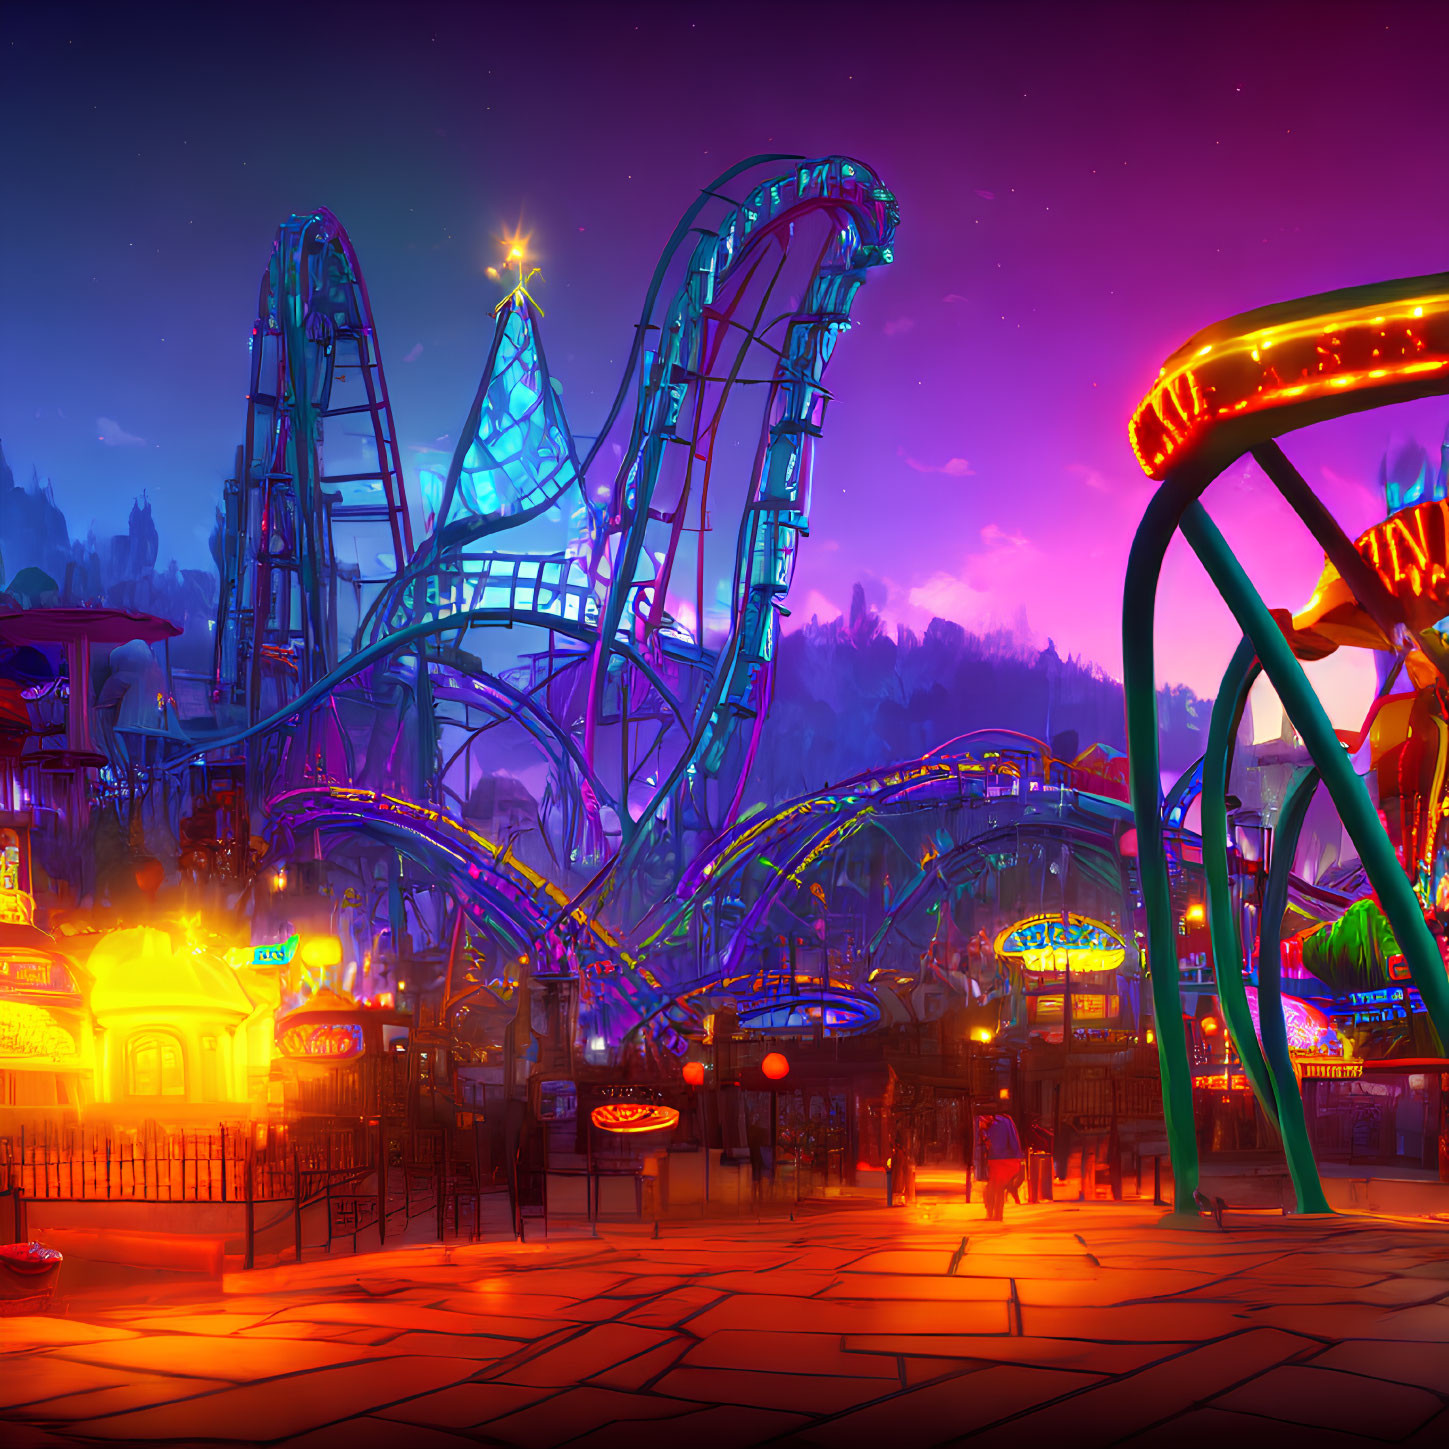 Colorful roller coasters in twilight amusement park illustration